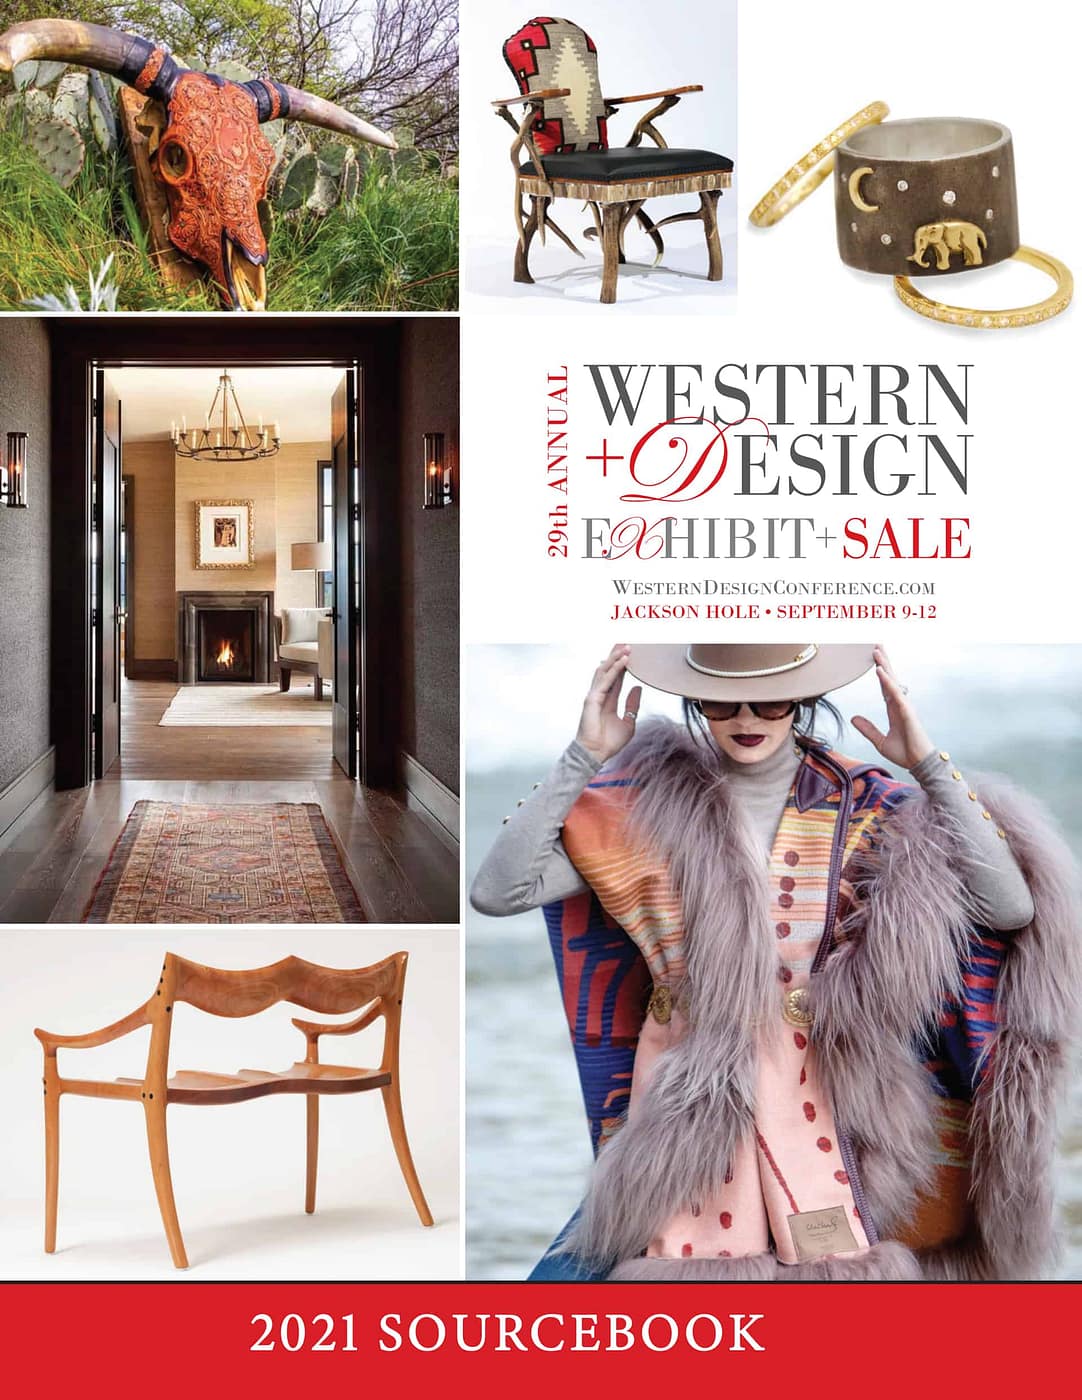 Western Design Conference Exhibit + Sale Jackson Hole, Wyoming